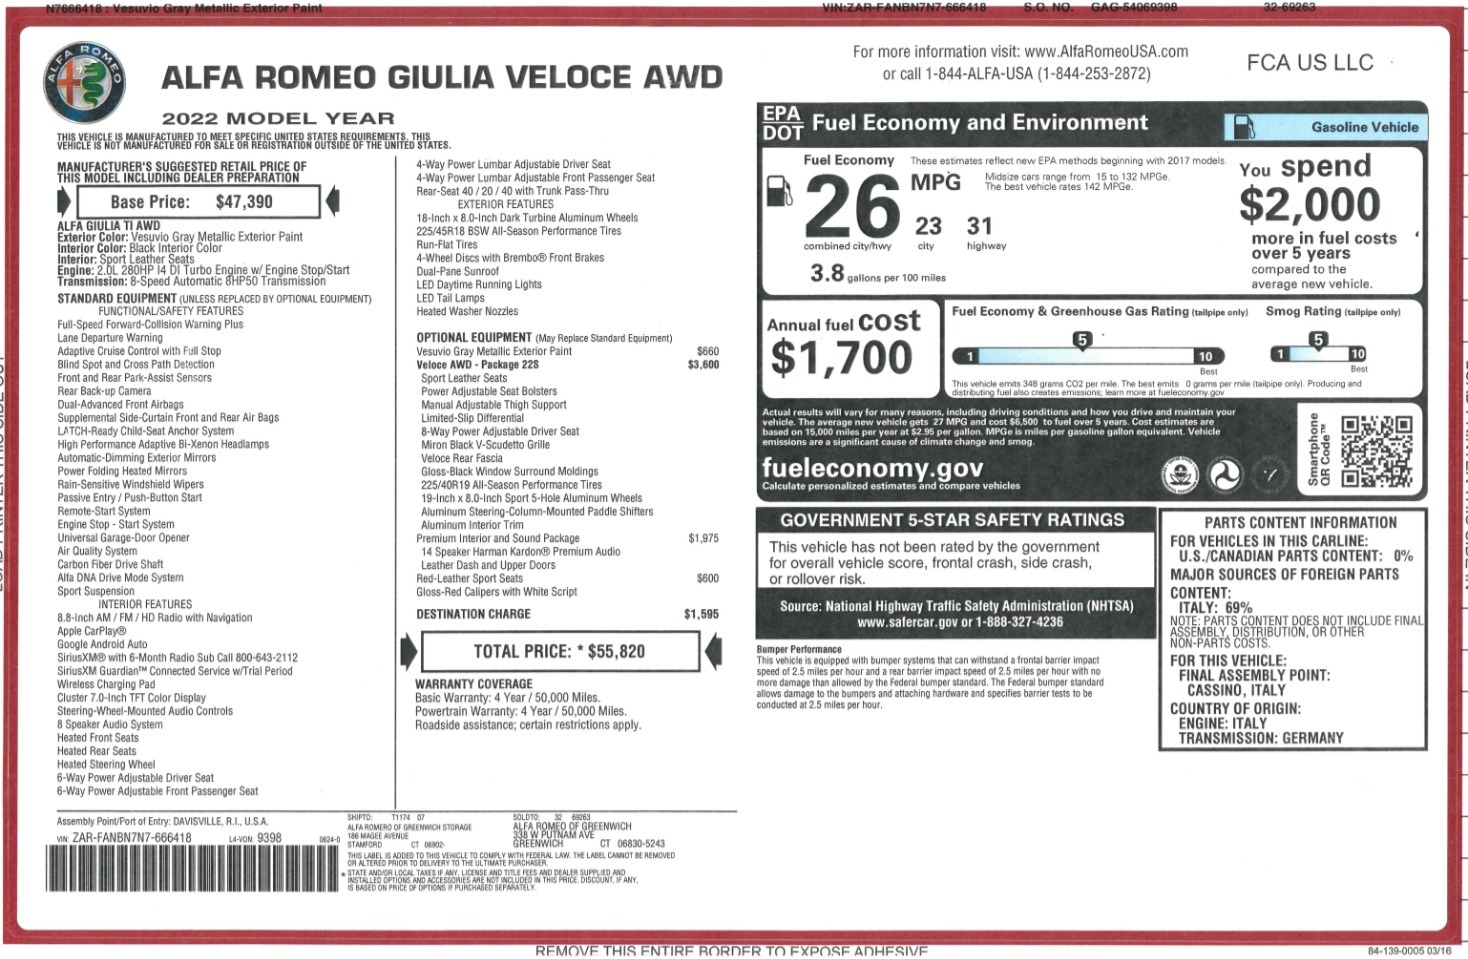 New 2022 Alfa Romeo Giulia Veloce